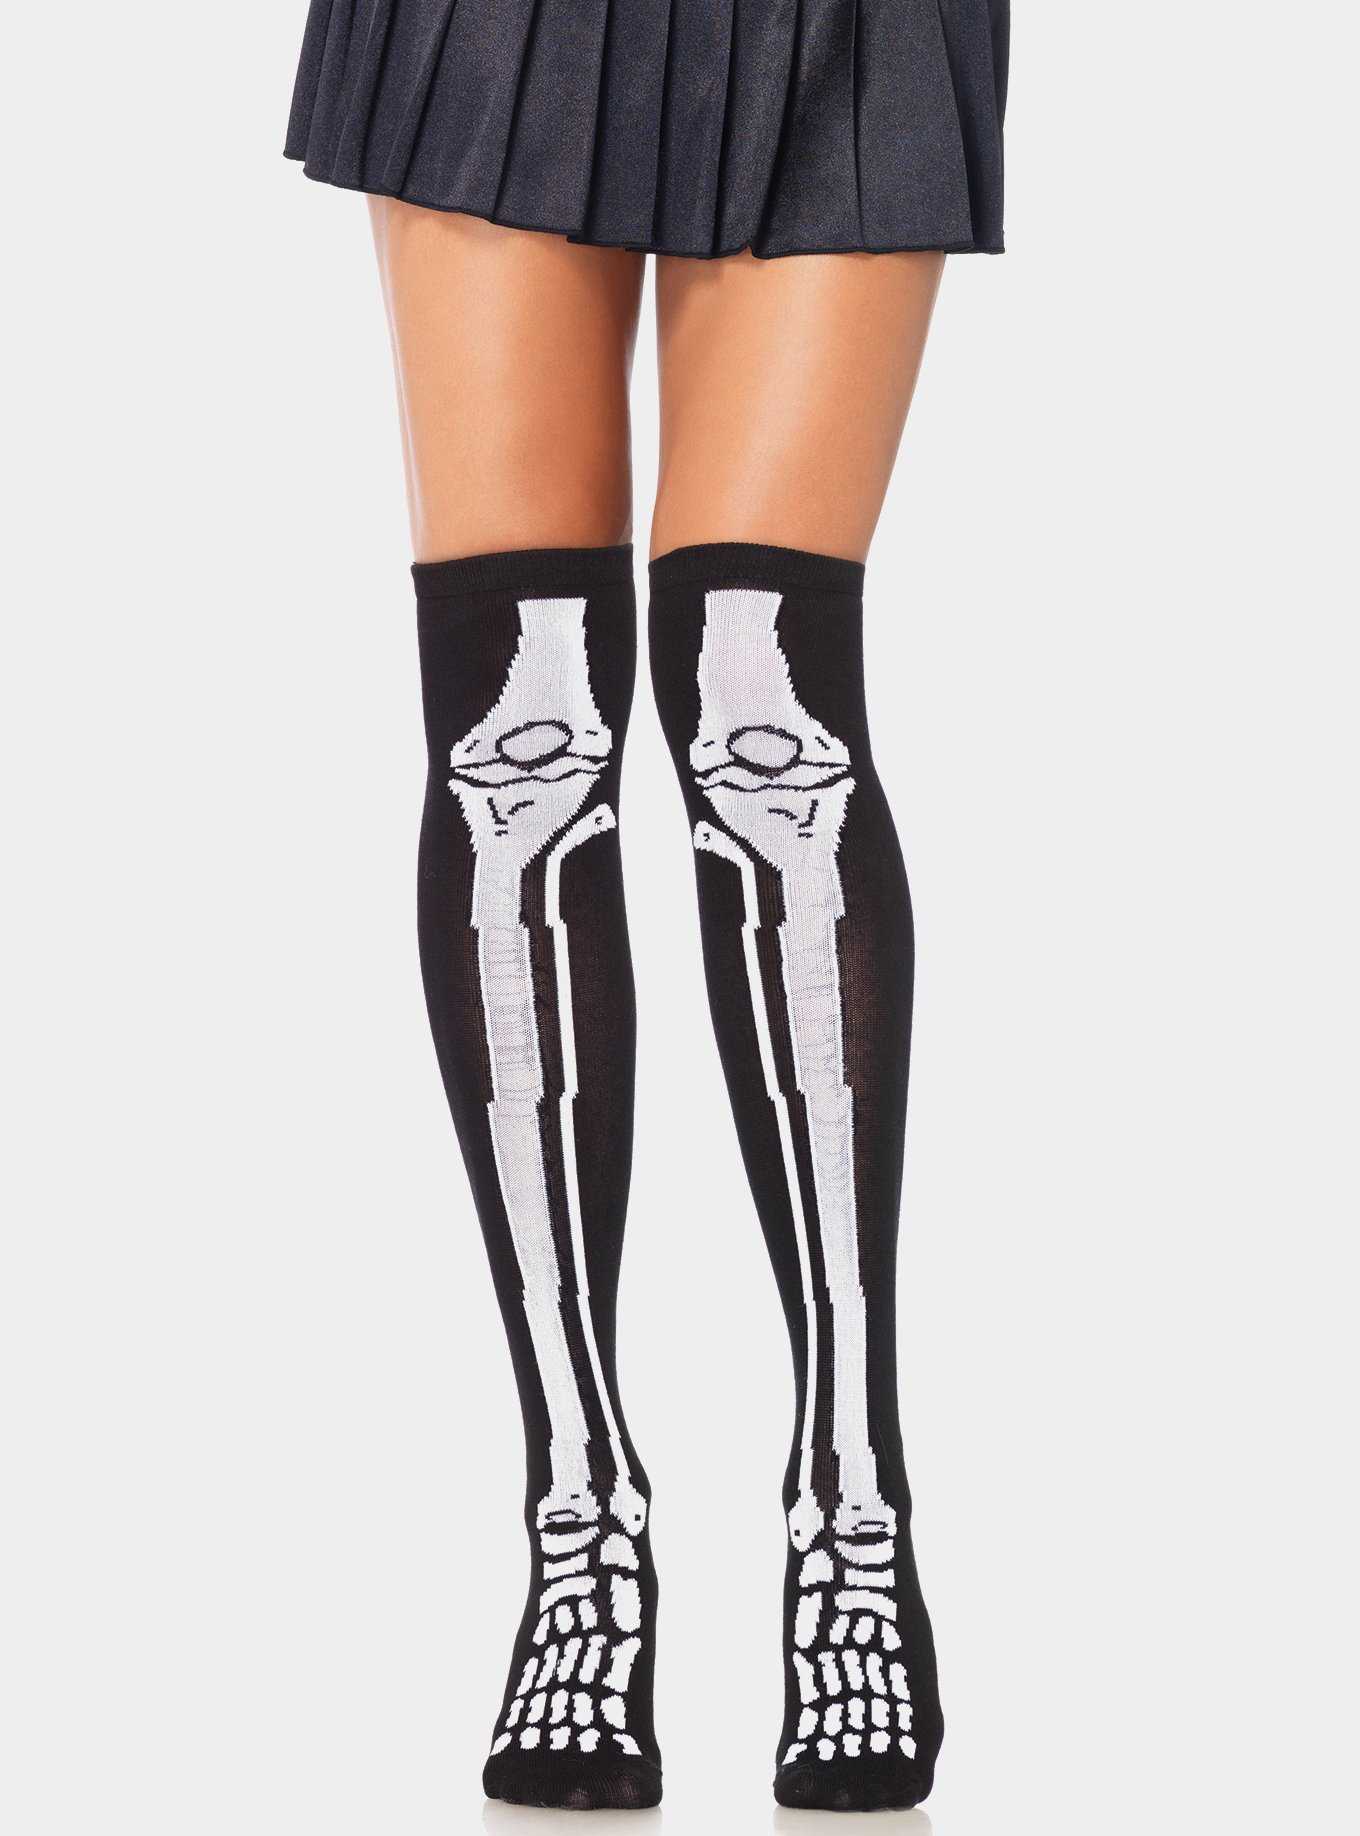 Acrylic Skeleton Over The Knee Socks, , hi-res